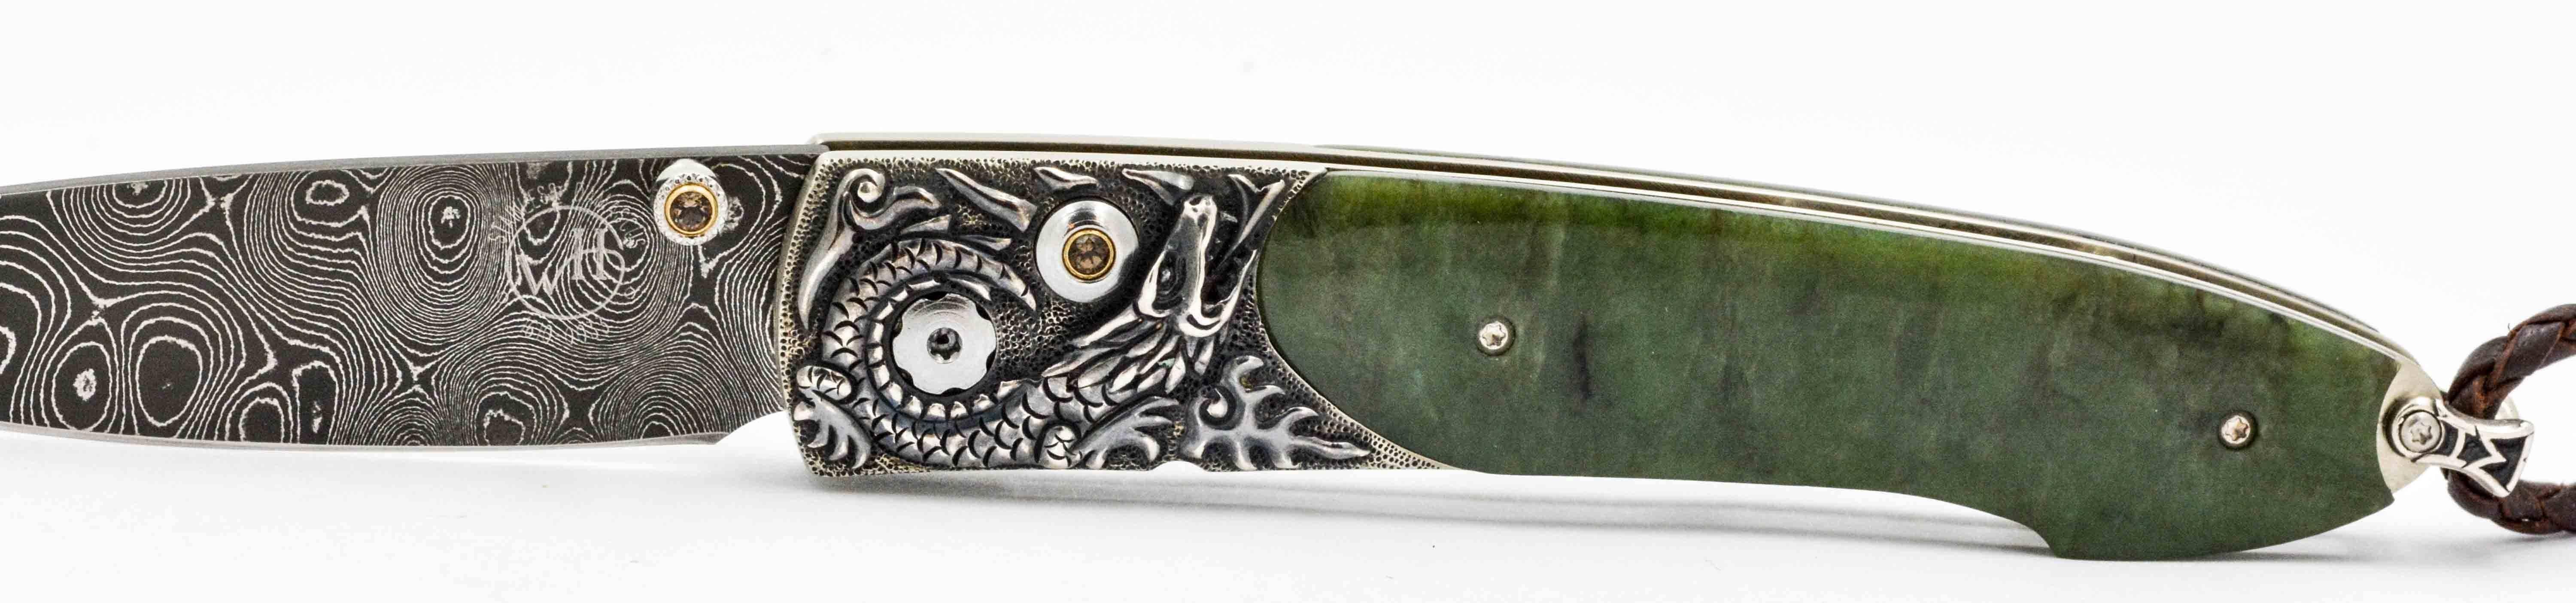 jade handle pocket knife